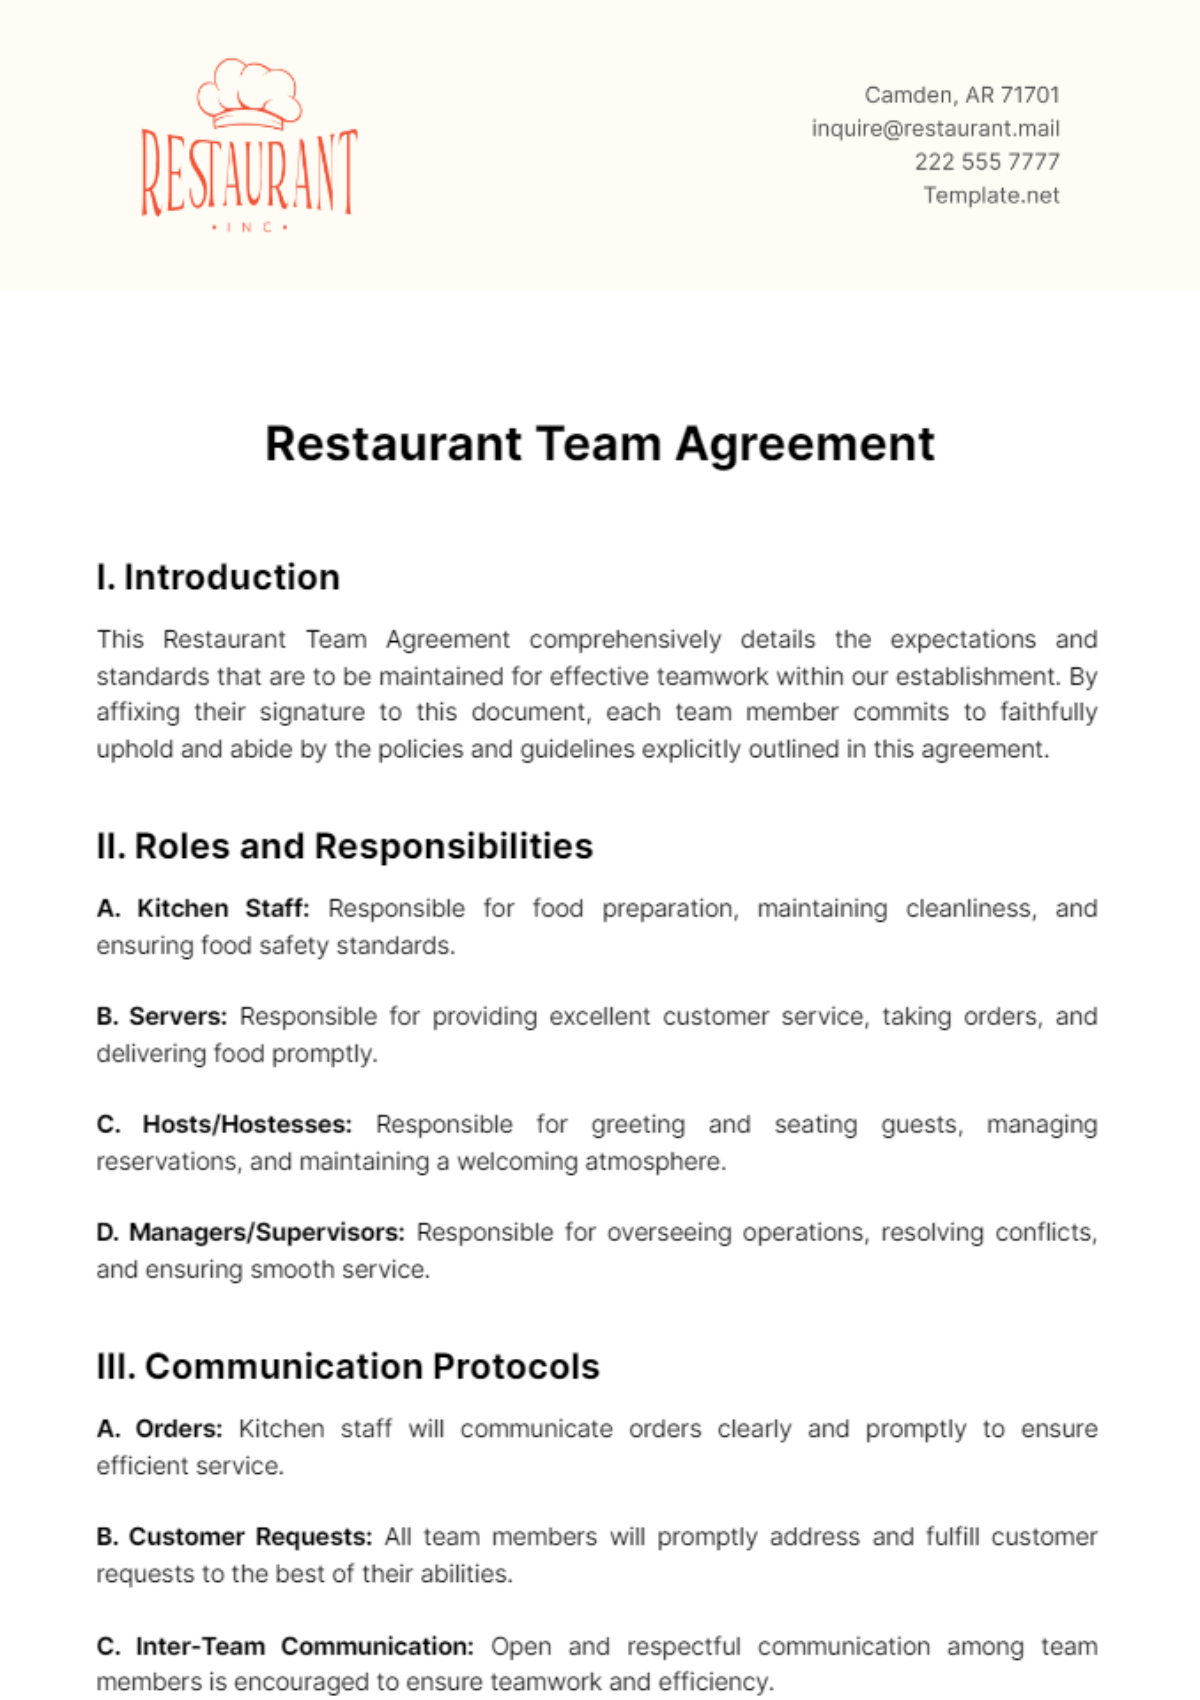 Restaurant Team Agreement Template